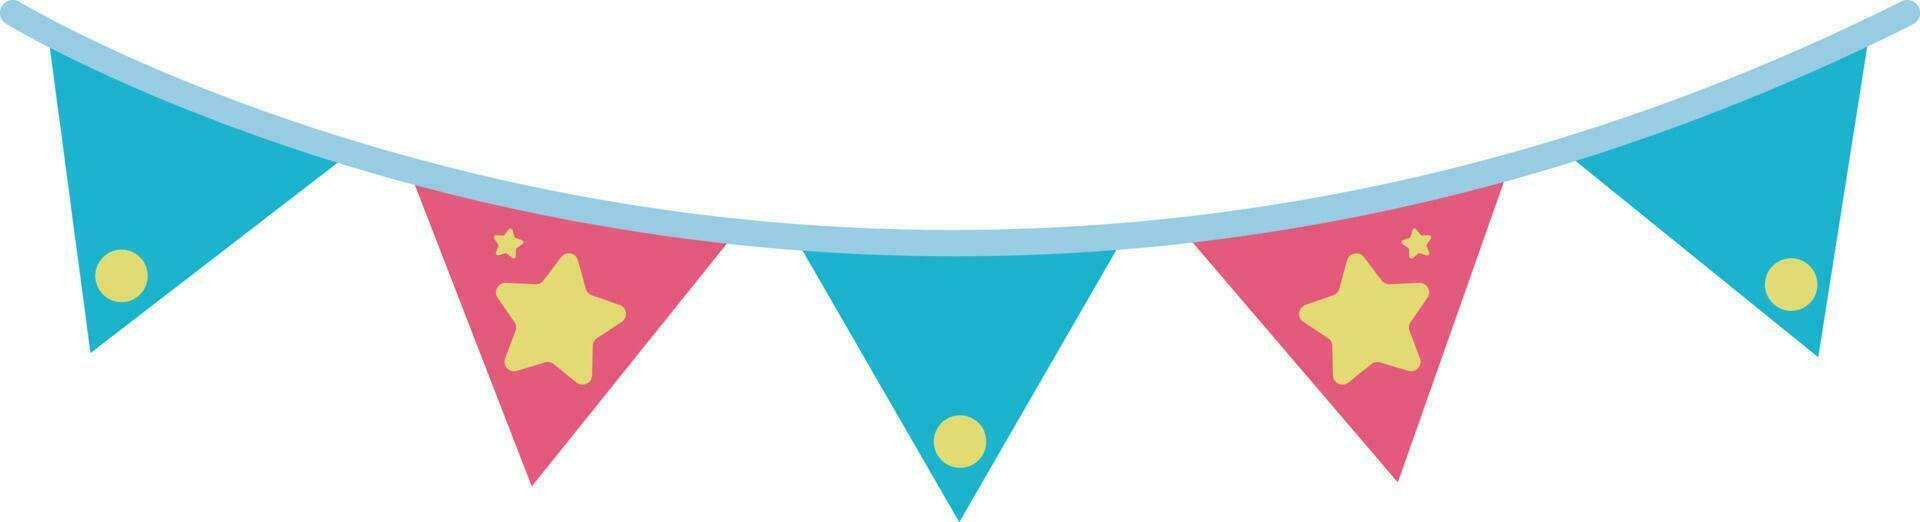 Dreieck bunt süß Party Flaggen Illustration Besondere Stil vektor